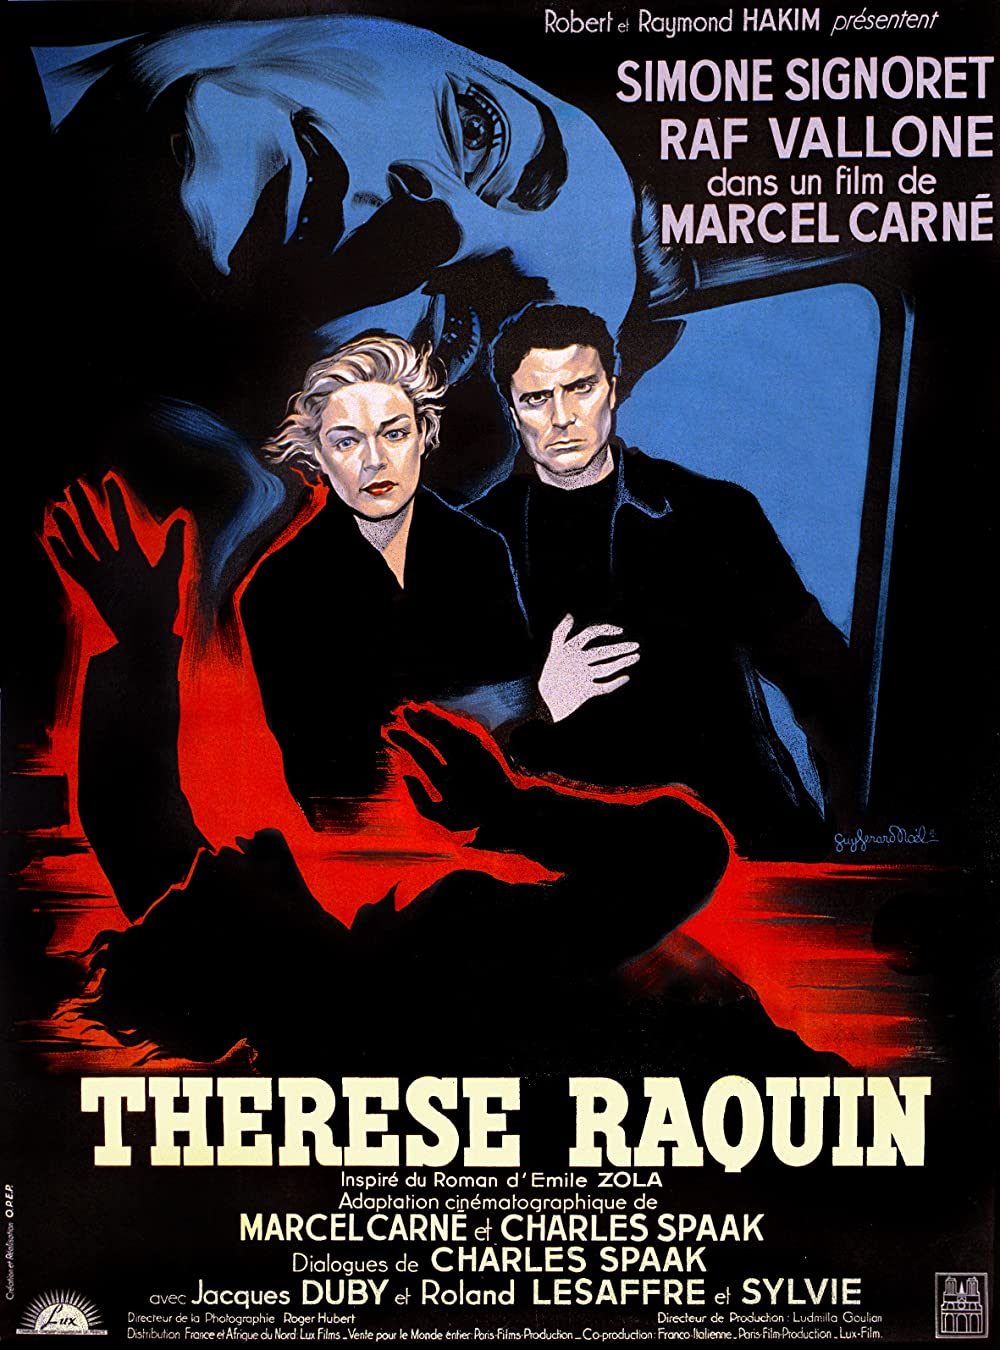 Filmbeschreibung zu Thérèse Raquin - Du sollst nicht ehebrechen (1953)